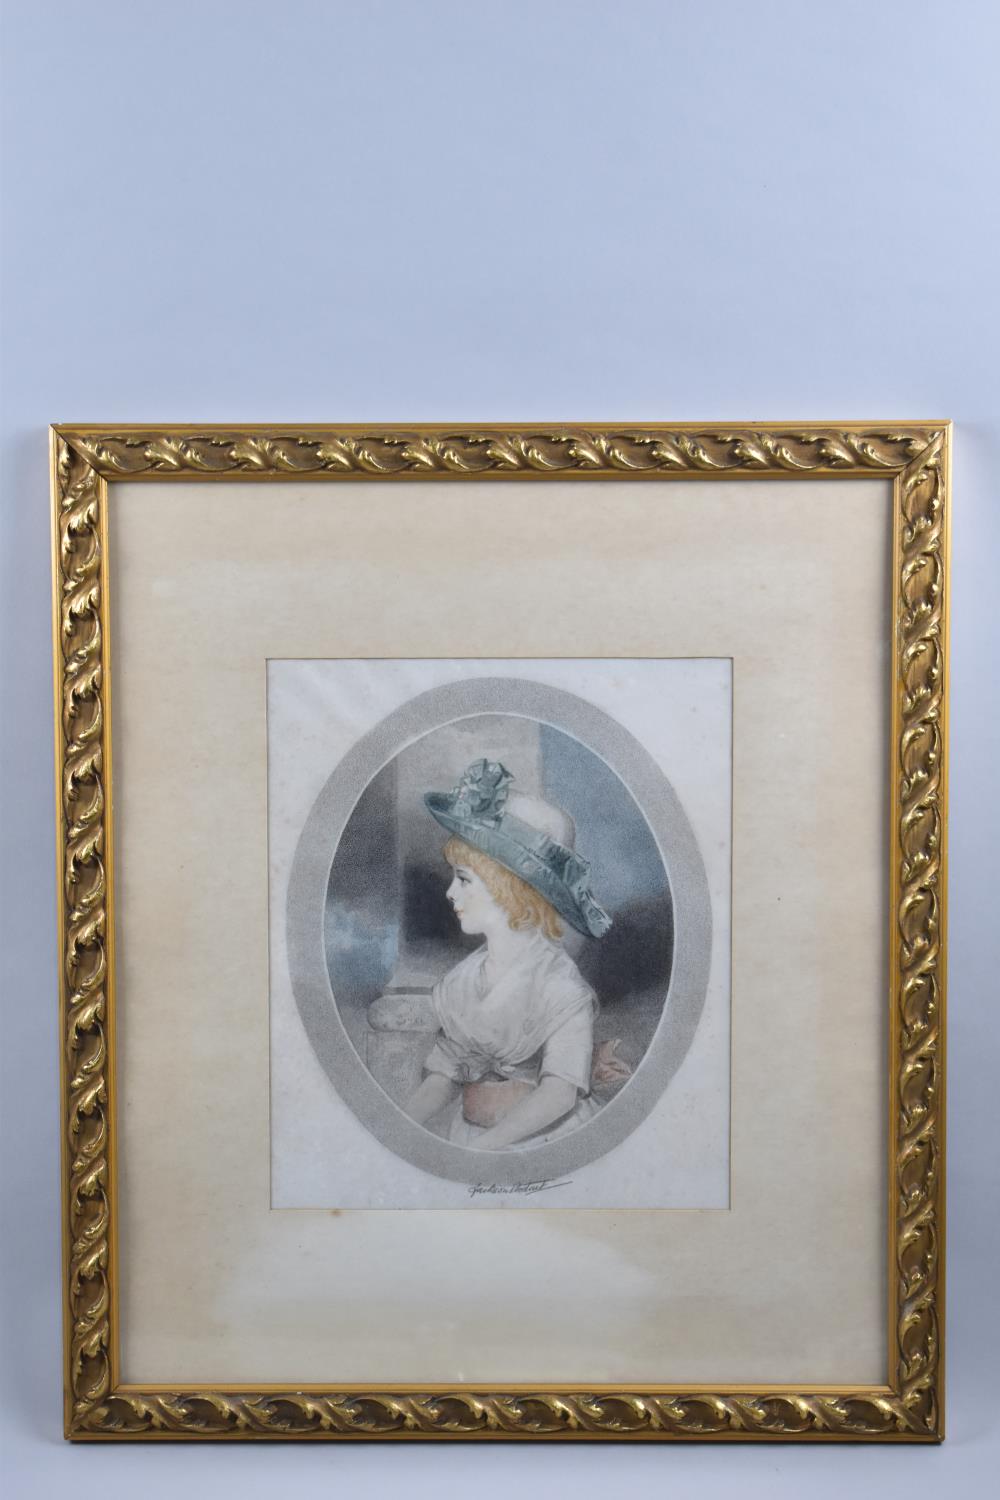 A Framed Jackson Stodart Print of a Young Girl, 21x26cm